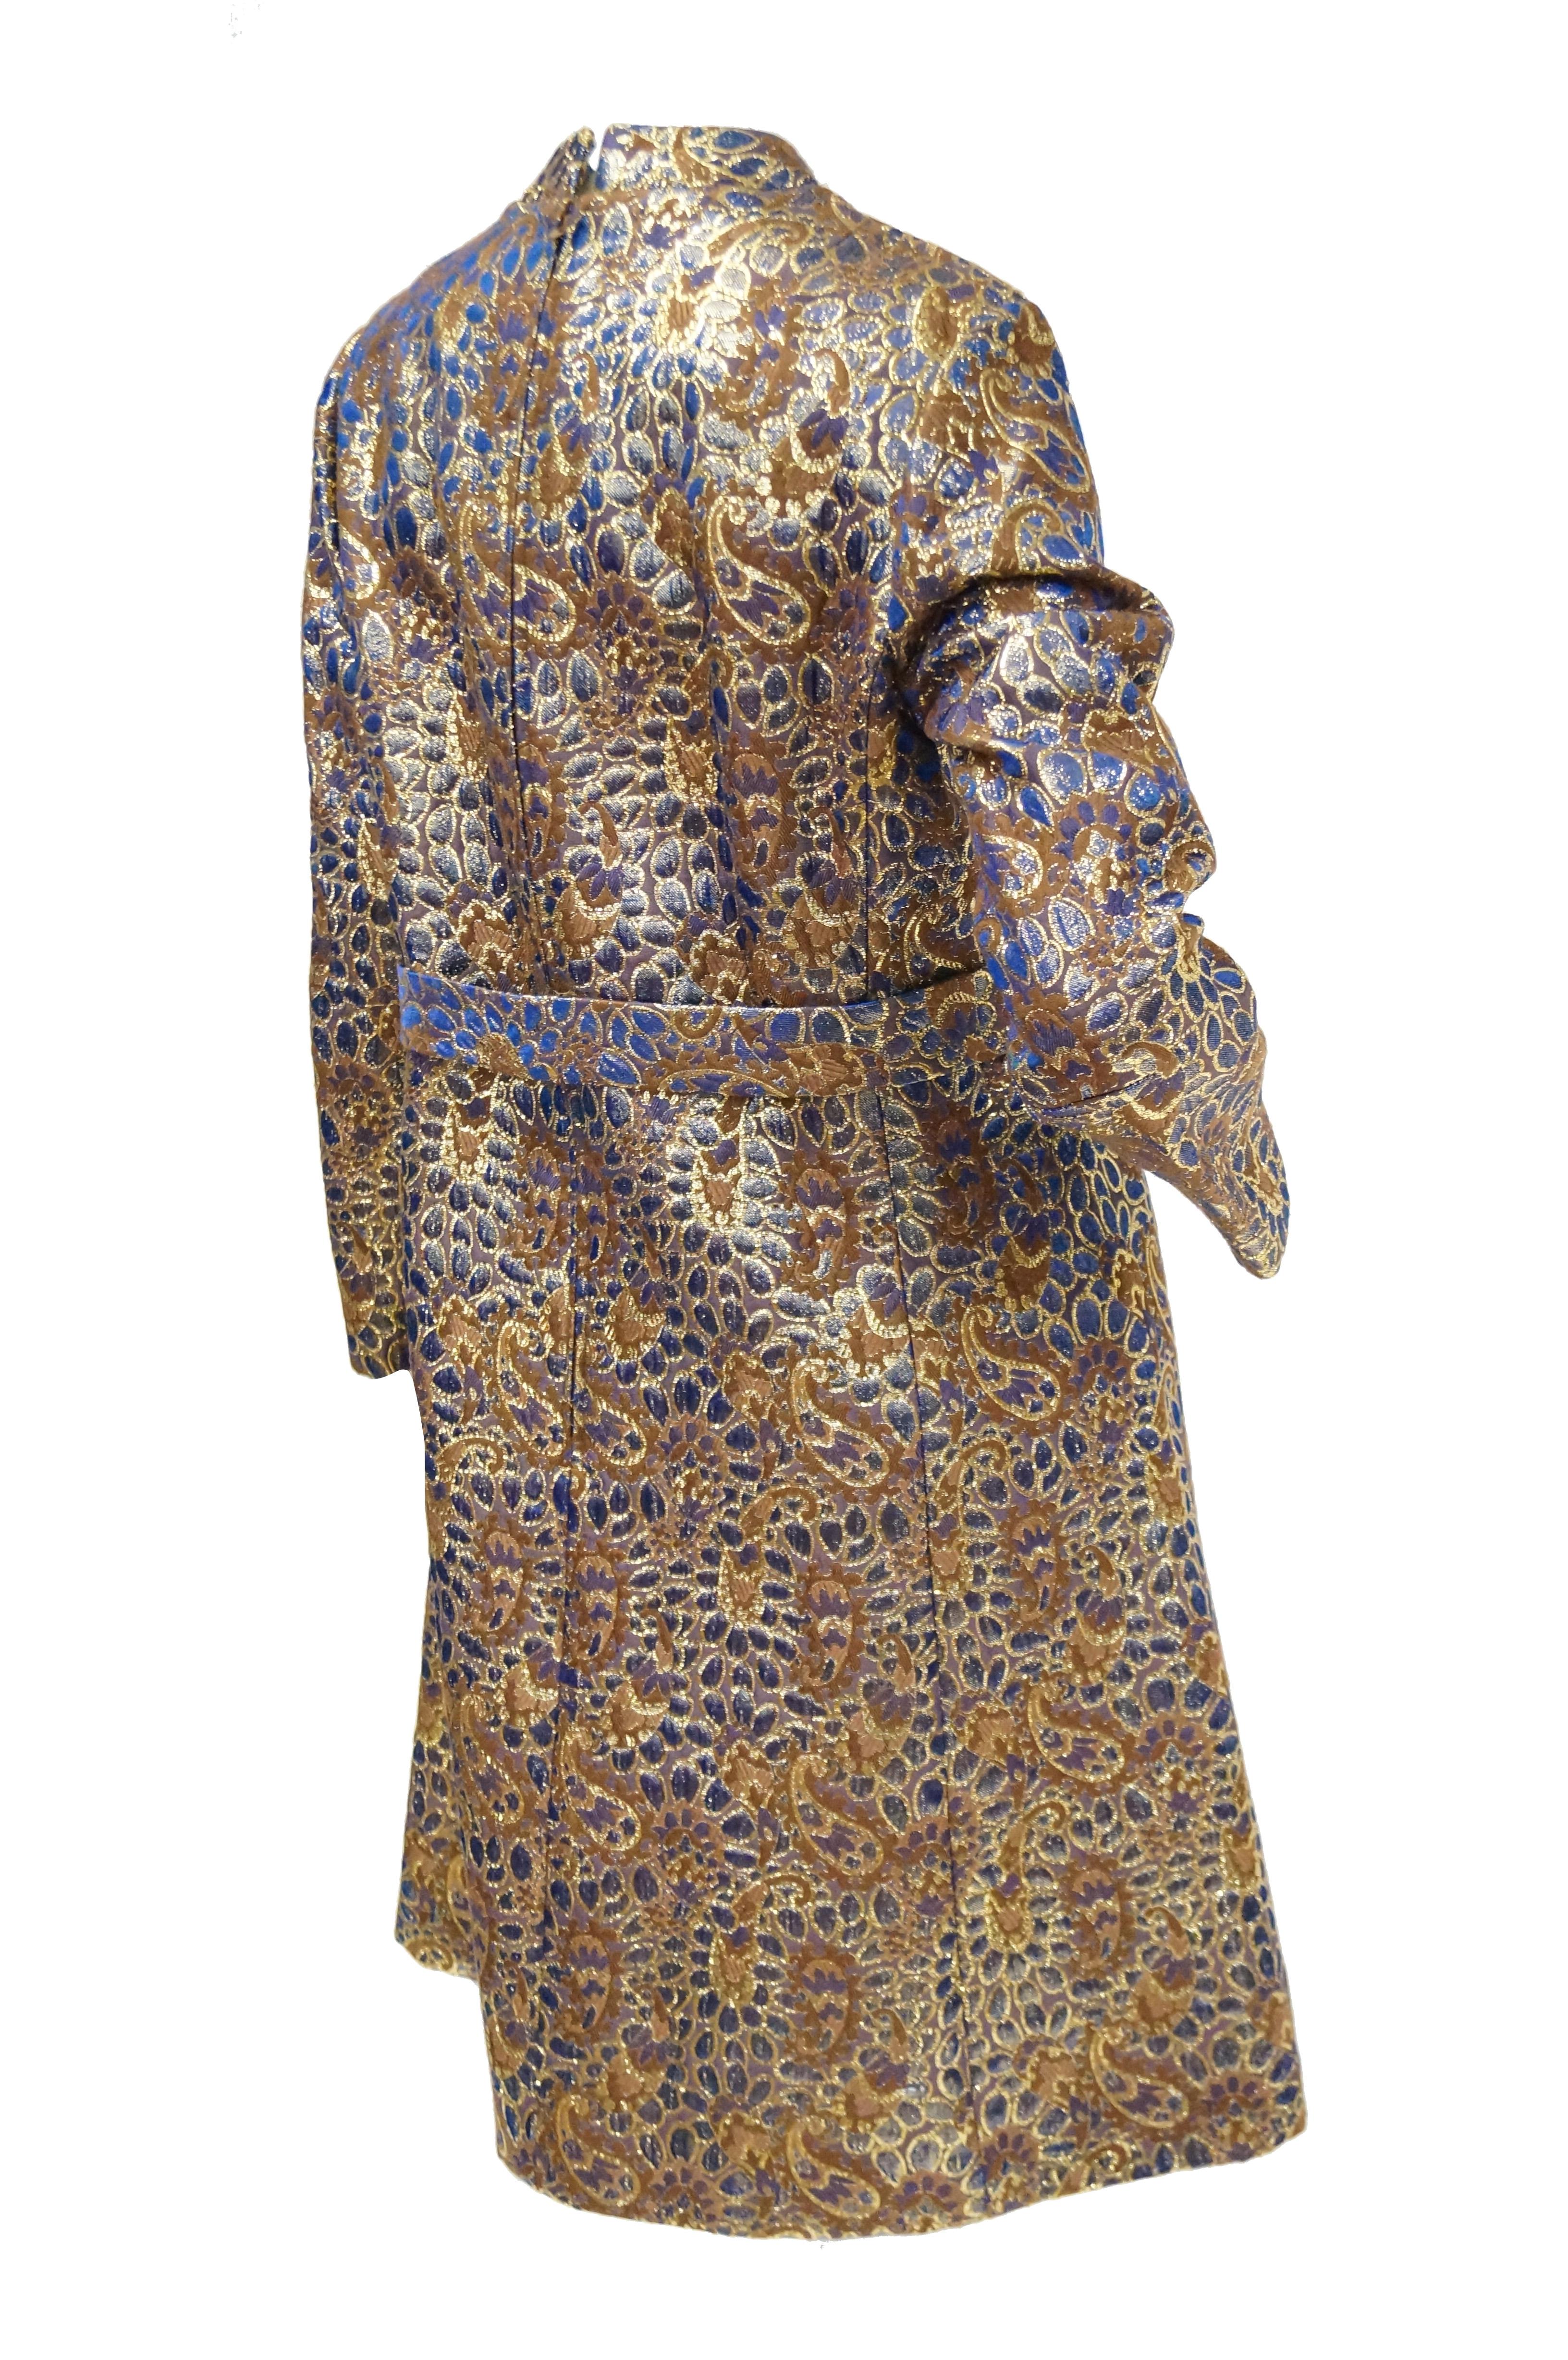 1960s Iridescent Blue and Brown Floral Brocade Mod Dress 4